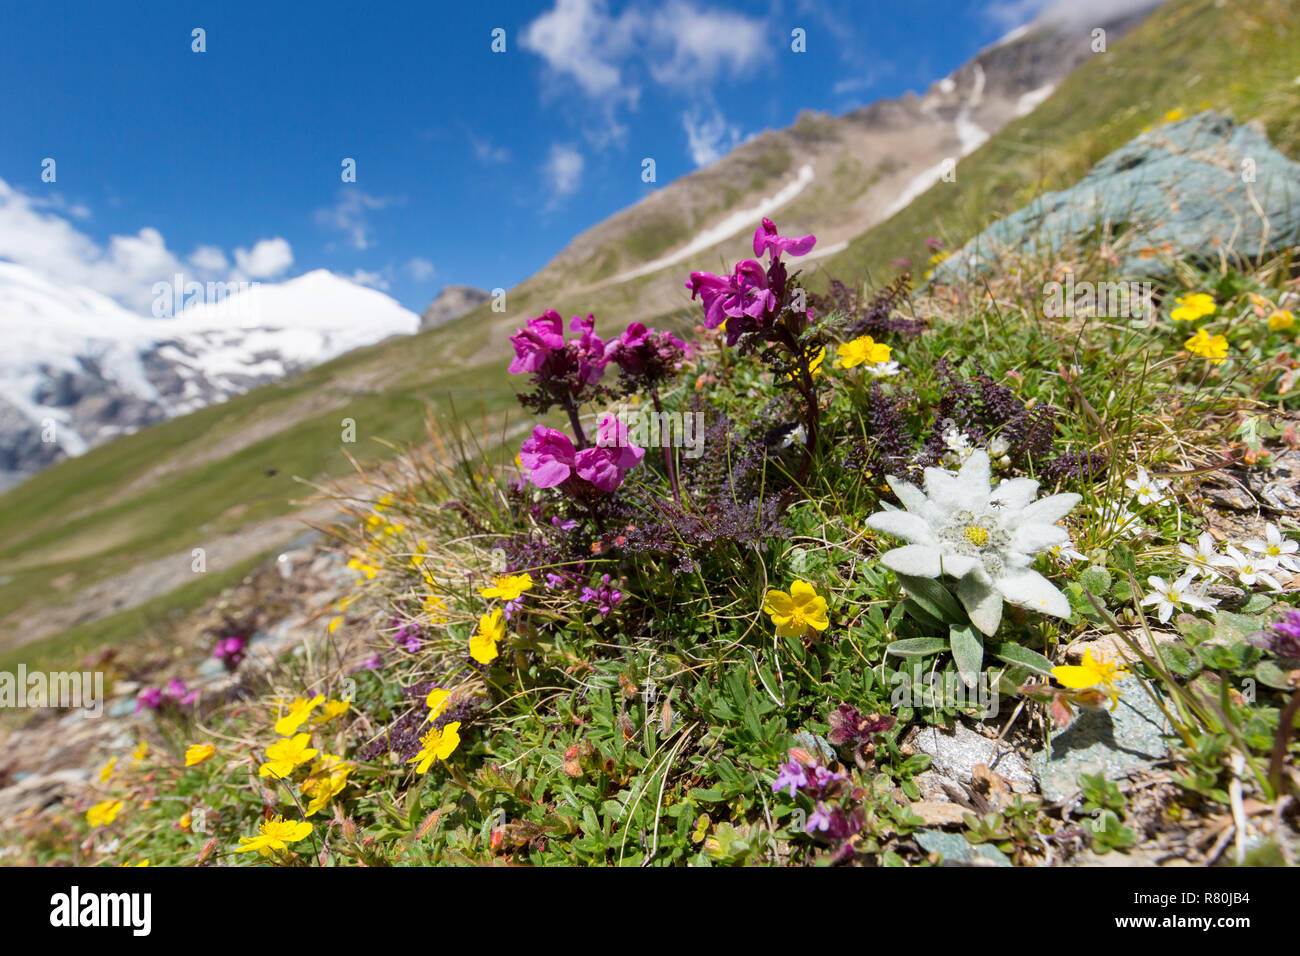 Edelweiss (Leontopodium nivale alpinum), planta con flores en el entorno alpino. Parque Nacional Hohe Tauern, Carintia, Austria Foto de stock